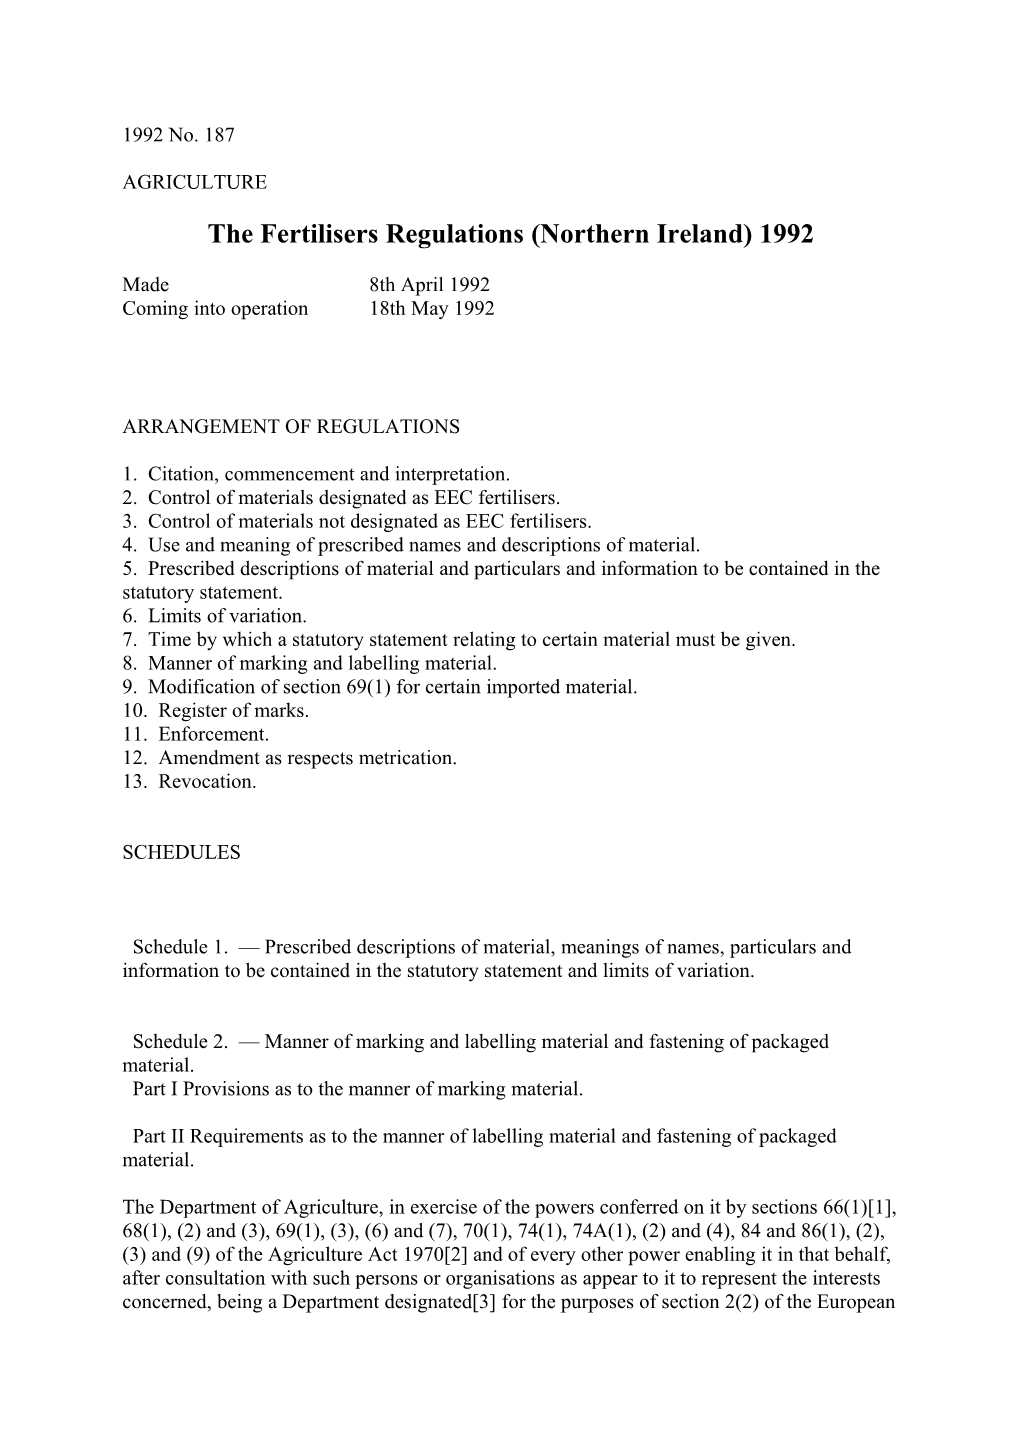 The Fertilisers Regulations (Northern Ireland) 1992